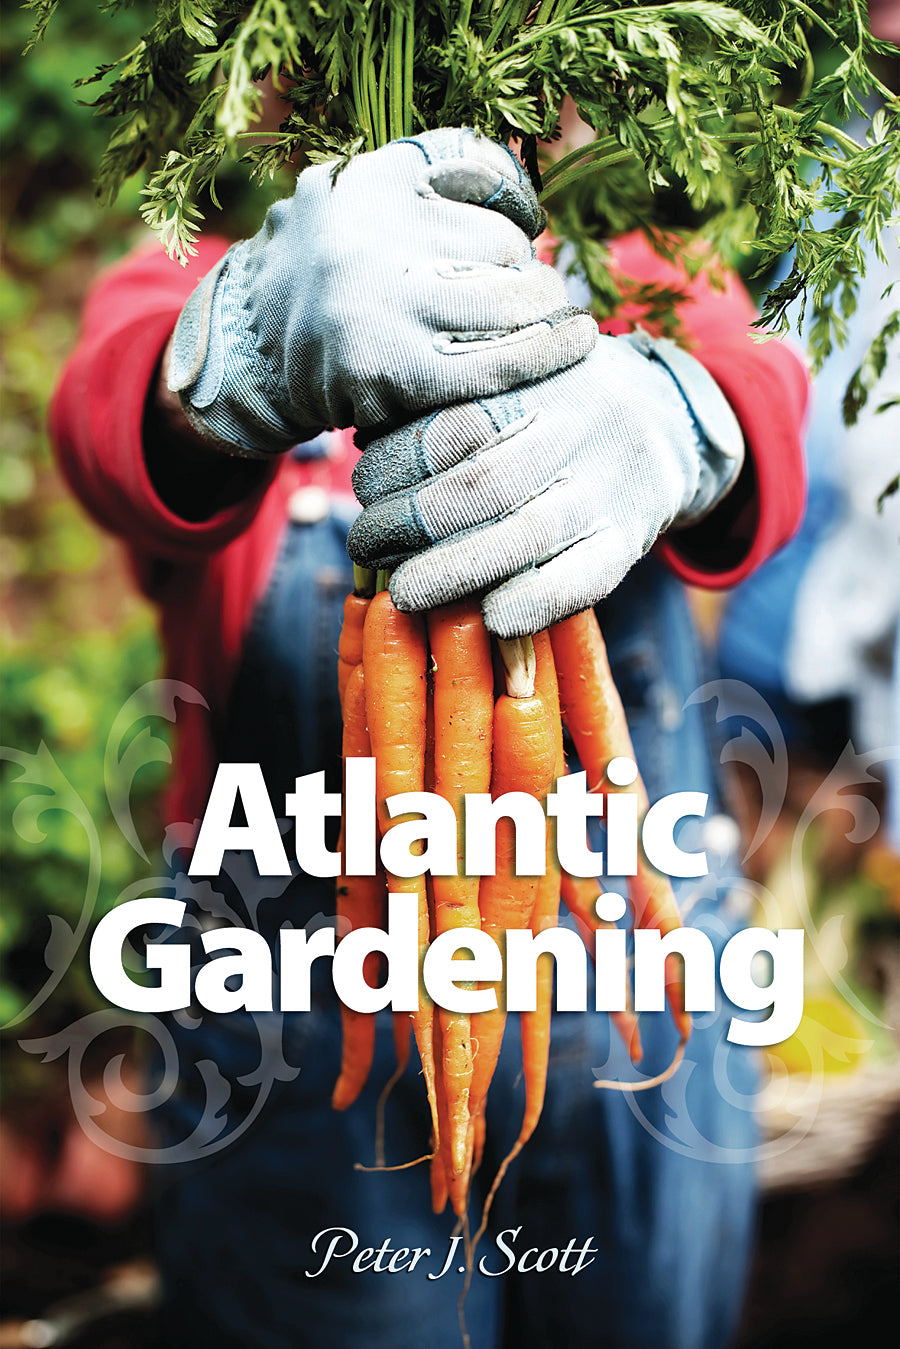 Atlantic Gardening by Peter J. Scott